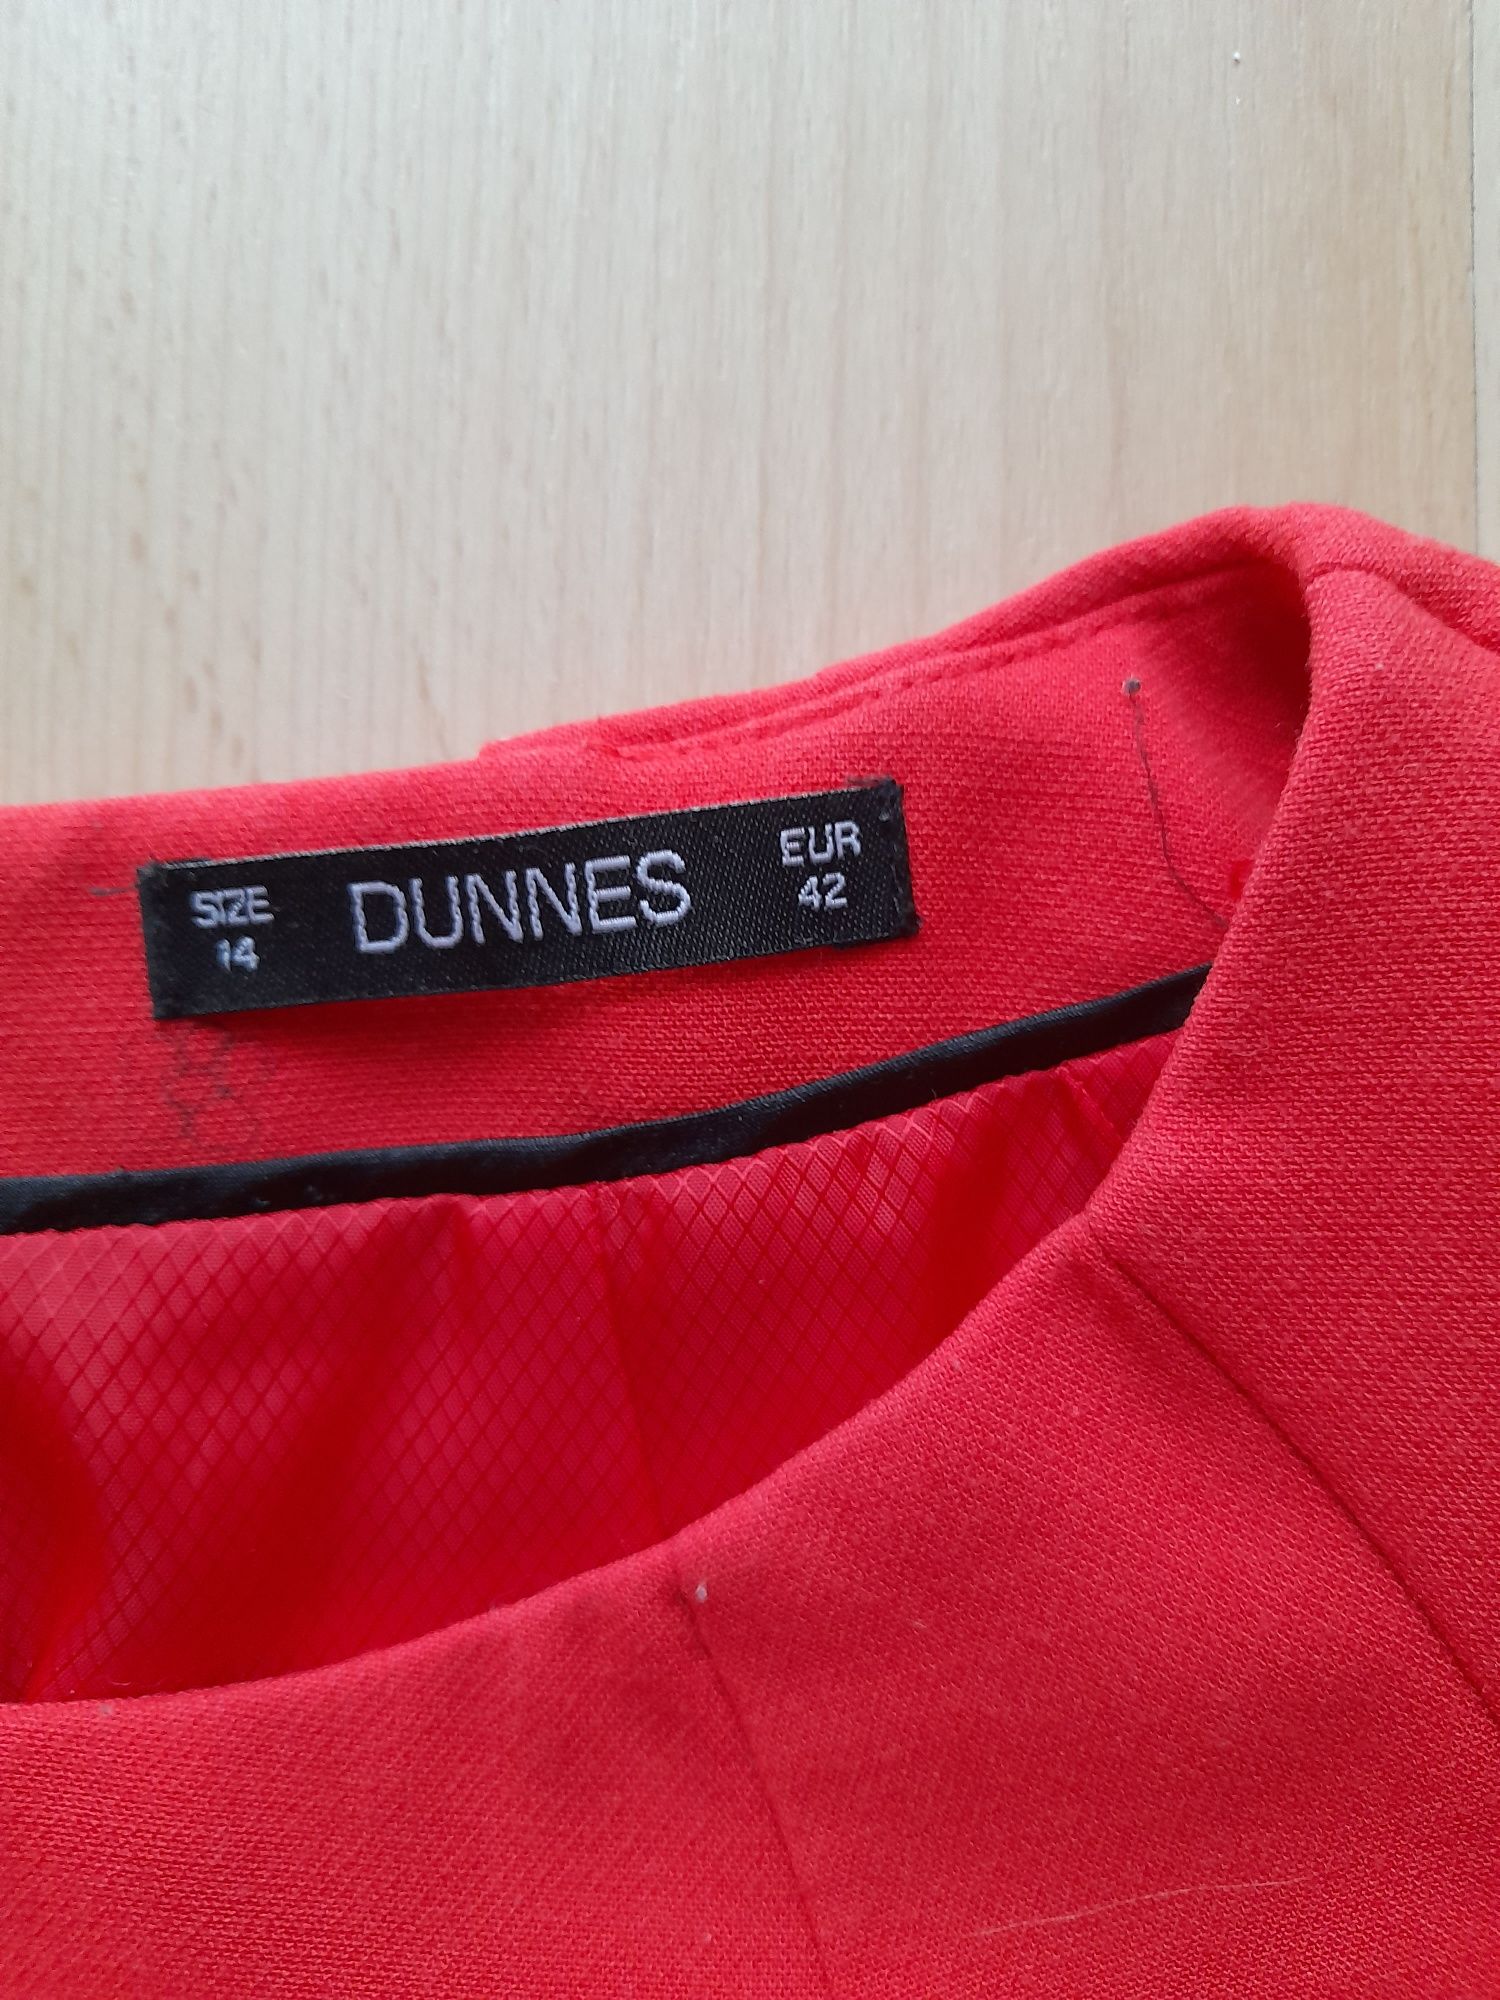 Czerwona elegancka sukienka Dunnes r.42